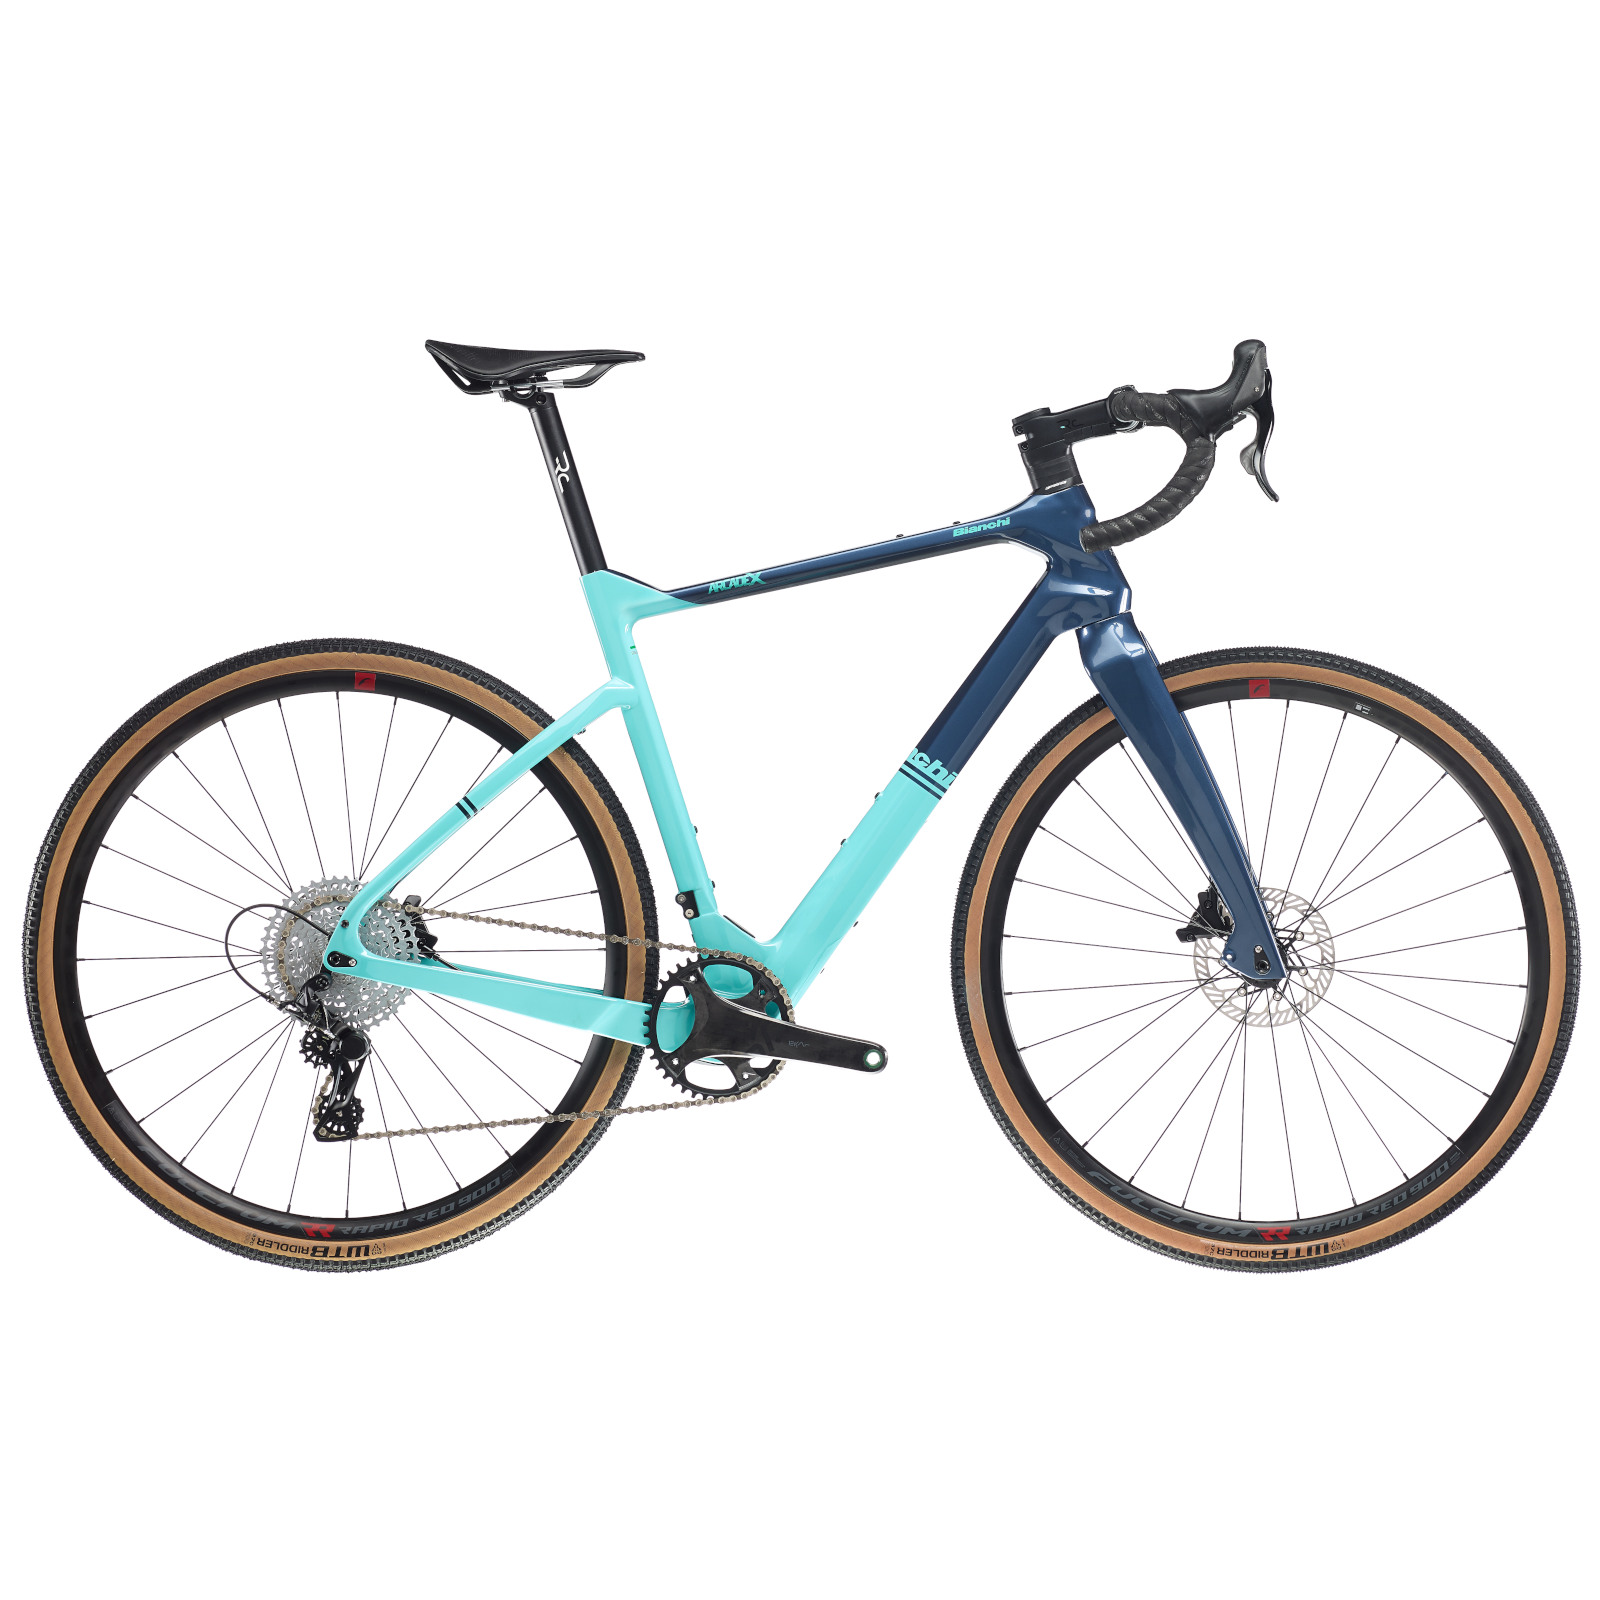 Productfoto van Bianchi ARCADEX Disc - Ekar - Carbon Gravel Bike - 2023 - CK16 / blue note